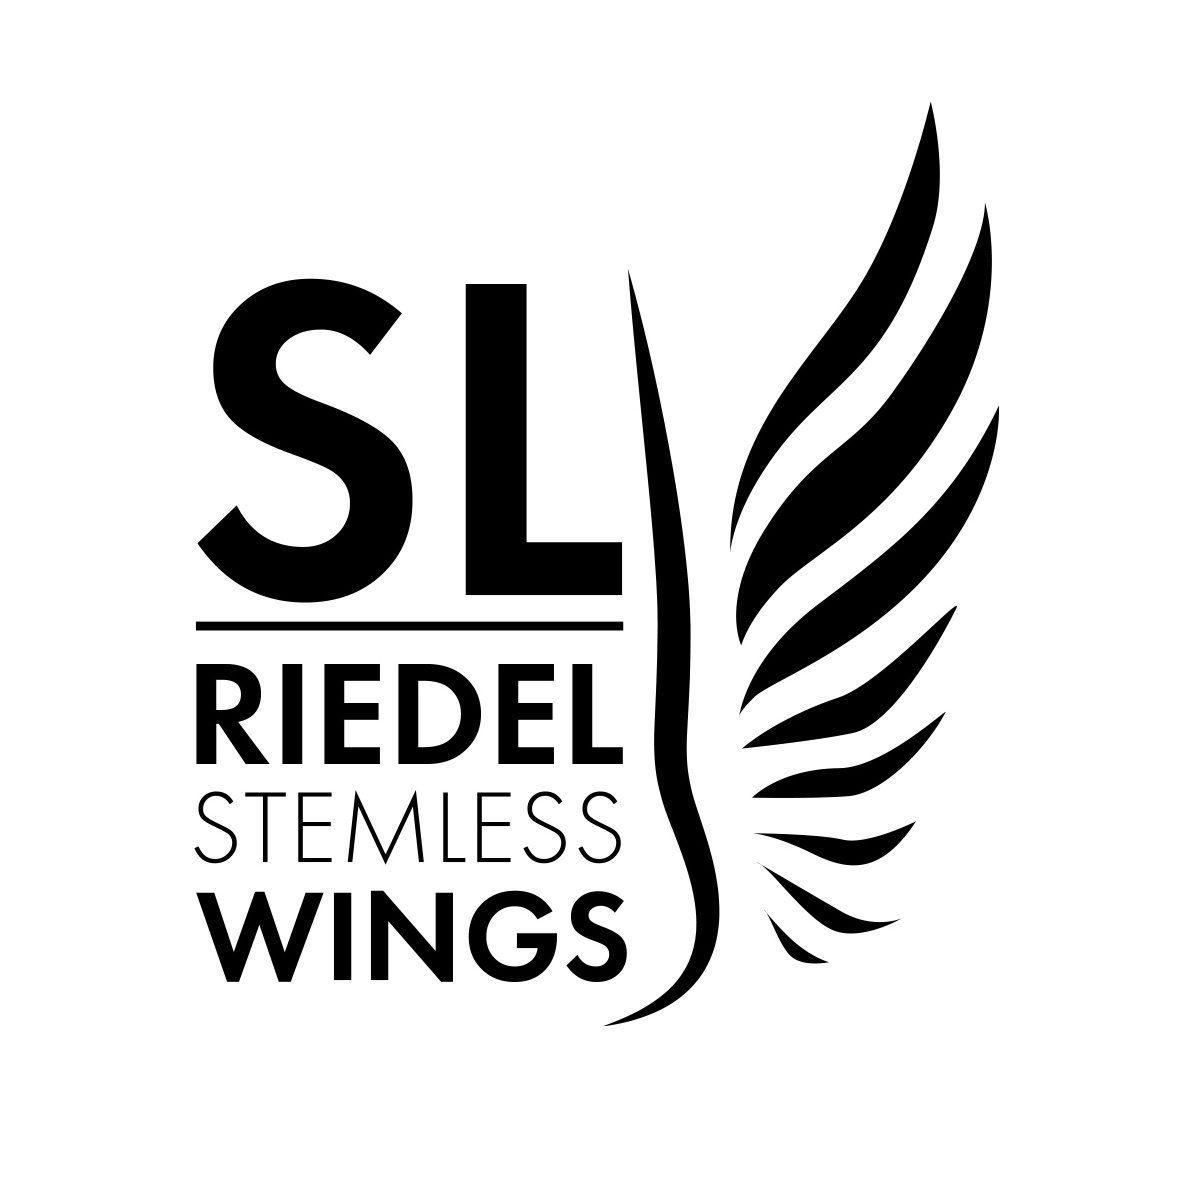  SL RIEDEL STEMLESS WINGS